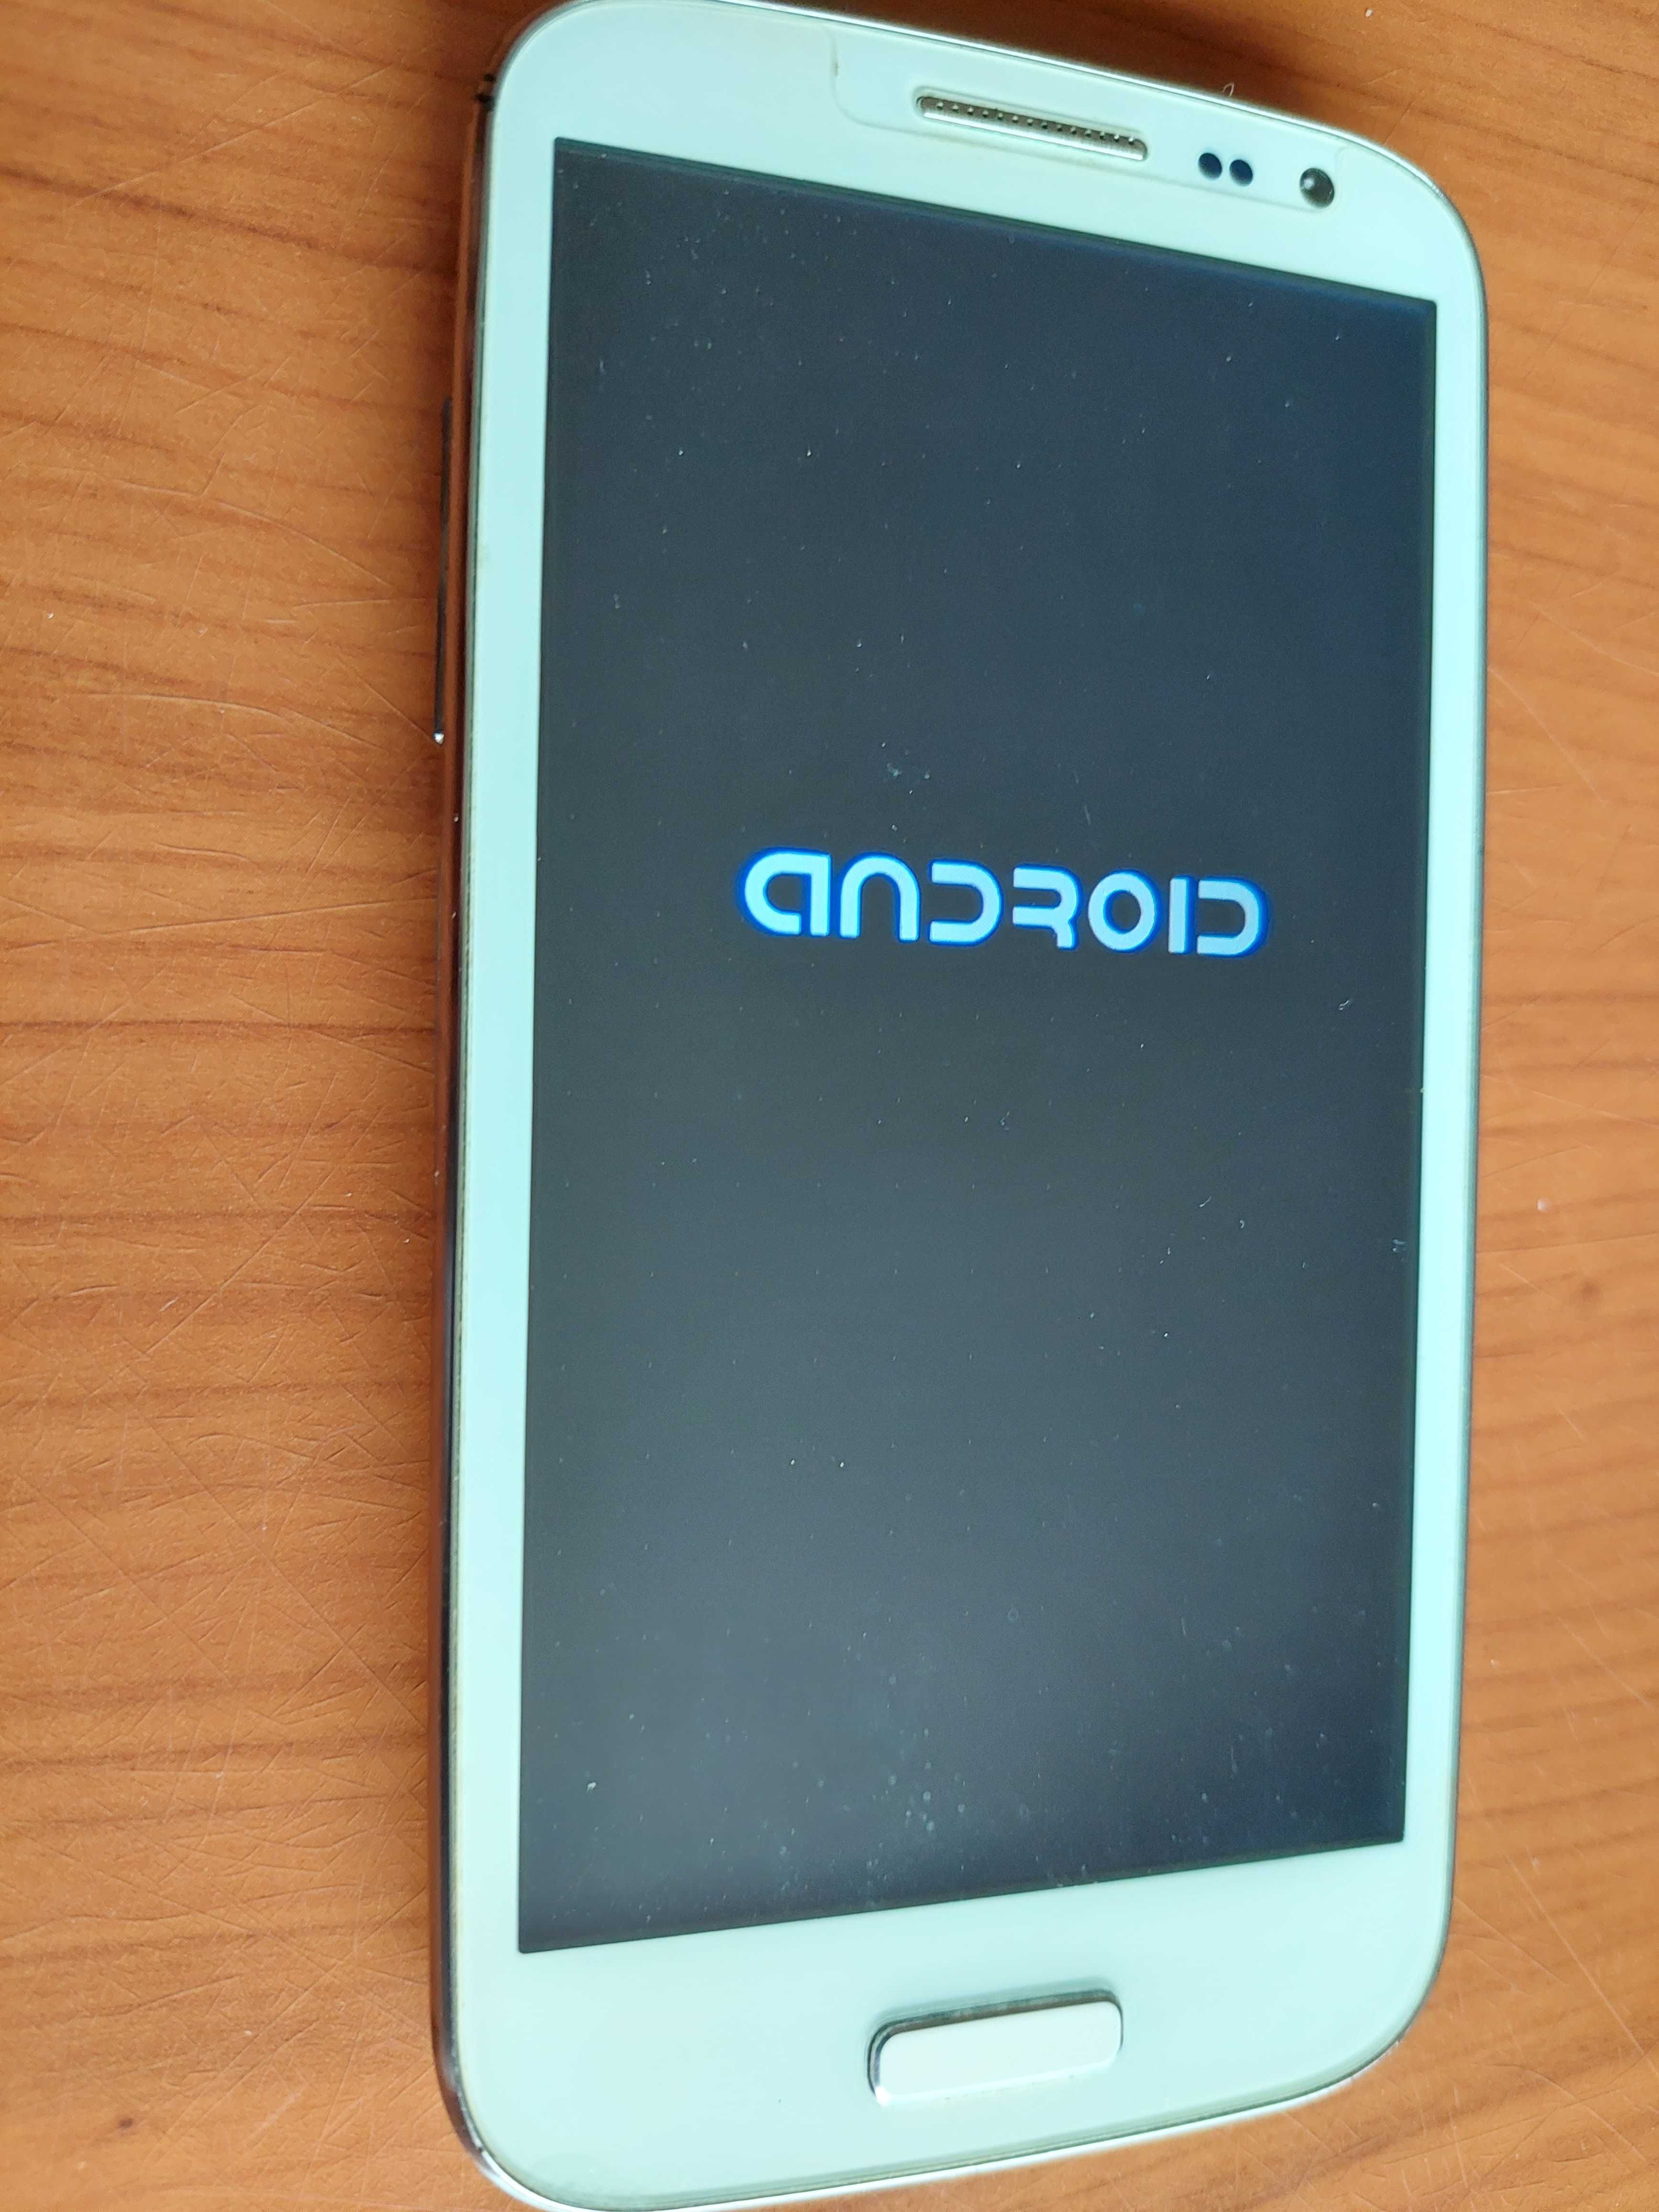 Telemóvel Android H9500